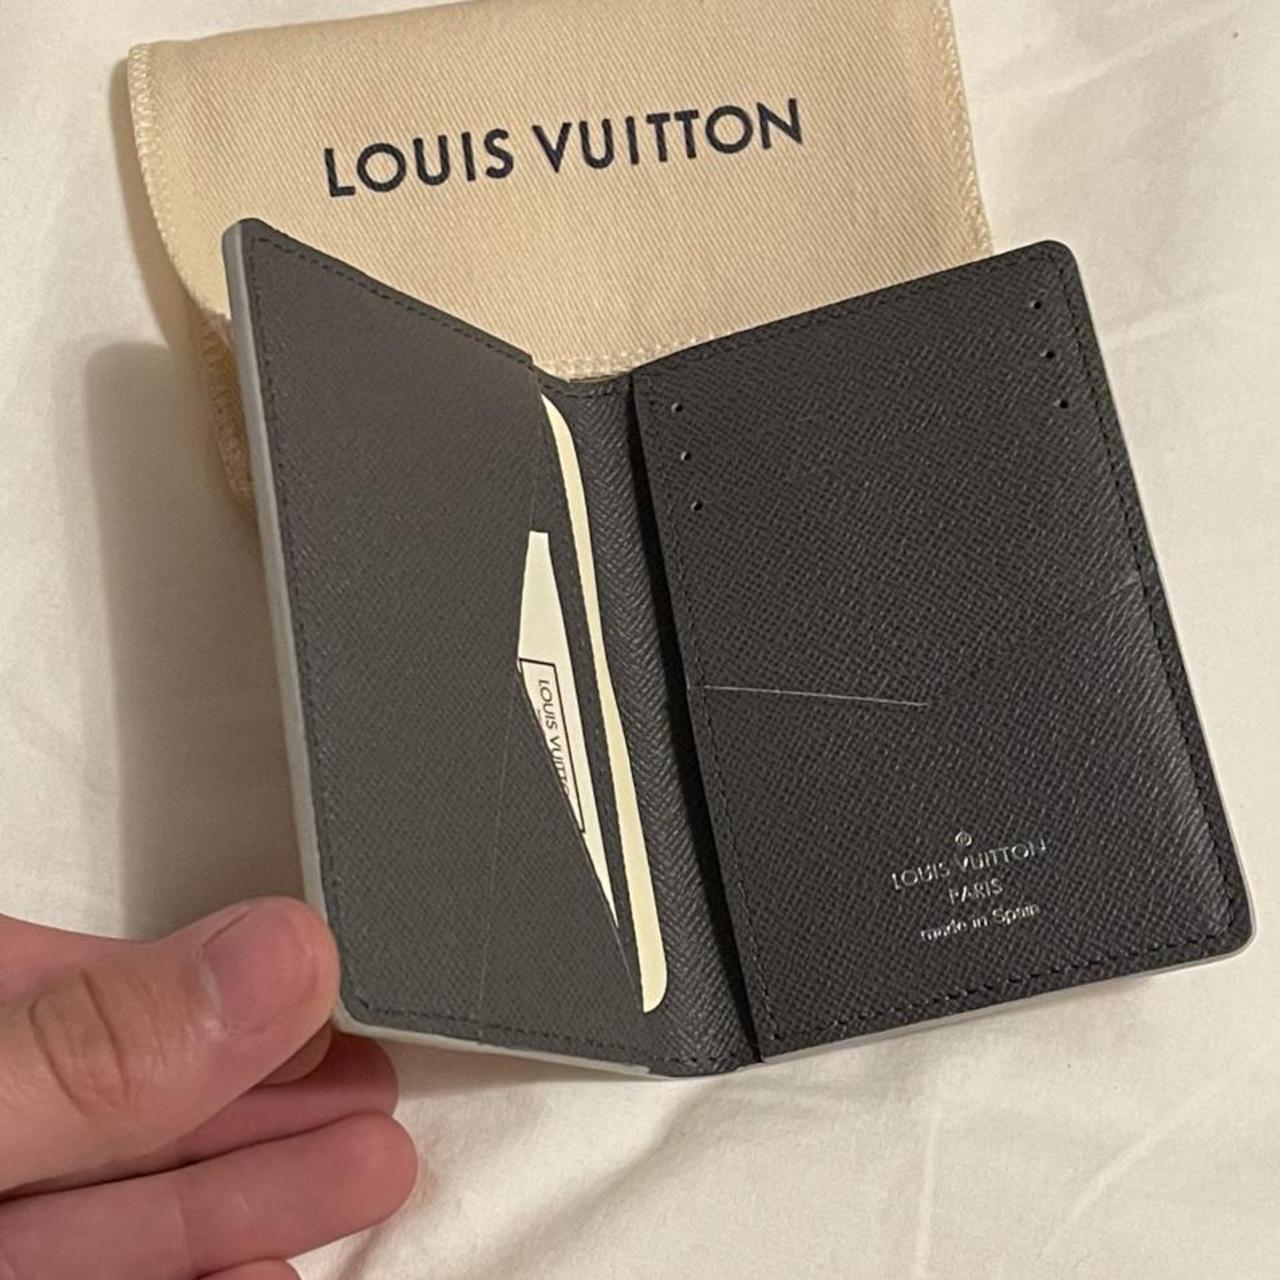 LOUIS VUITTON - Men's Pocket Organizer